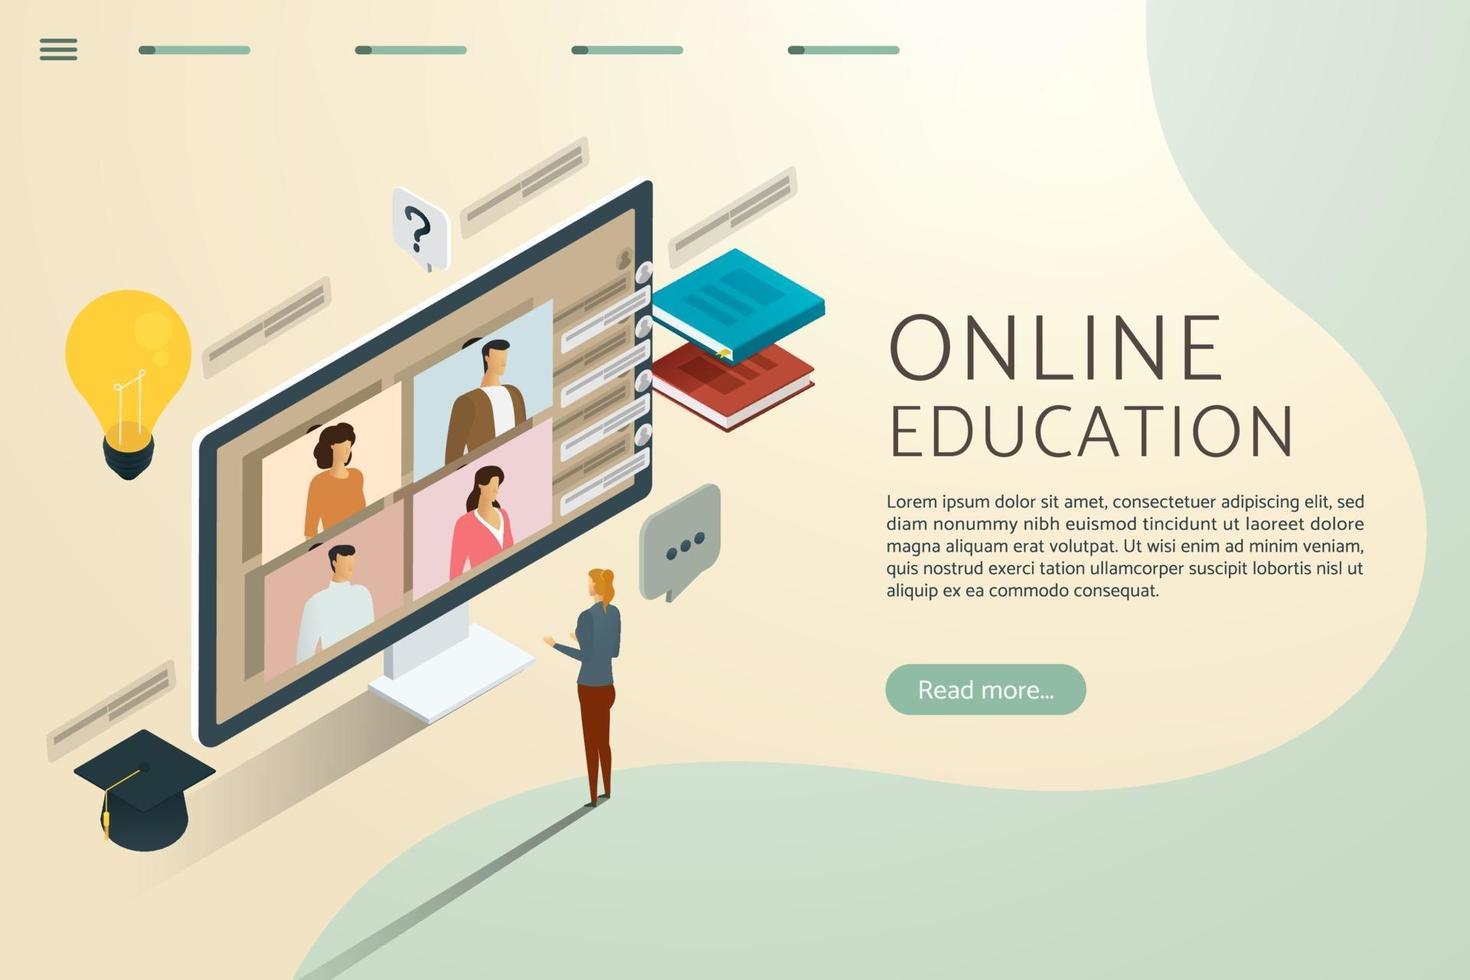 videochamada educacional online. vetor